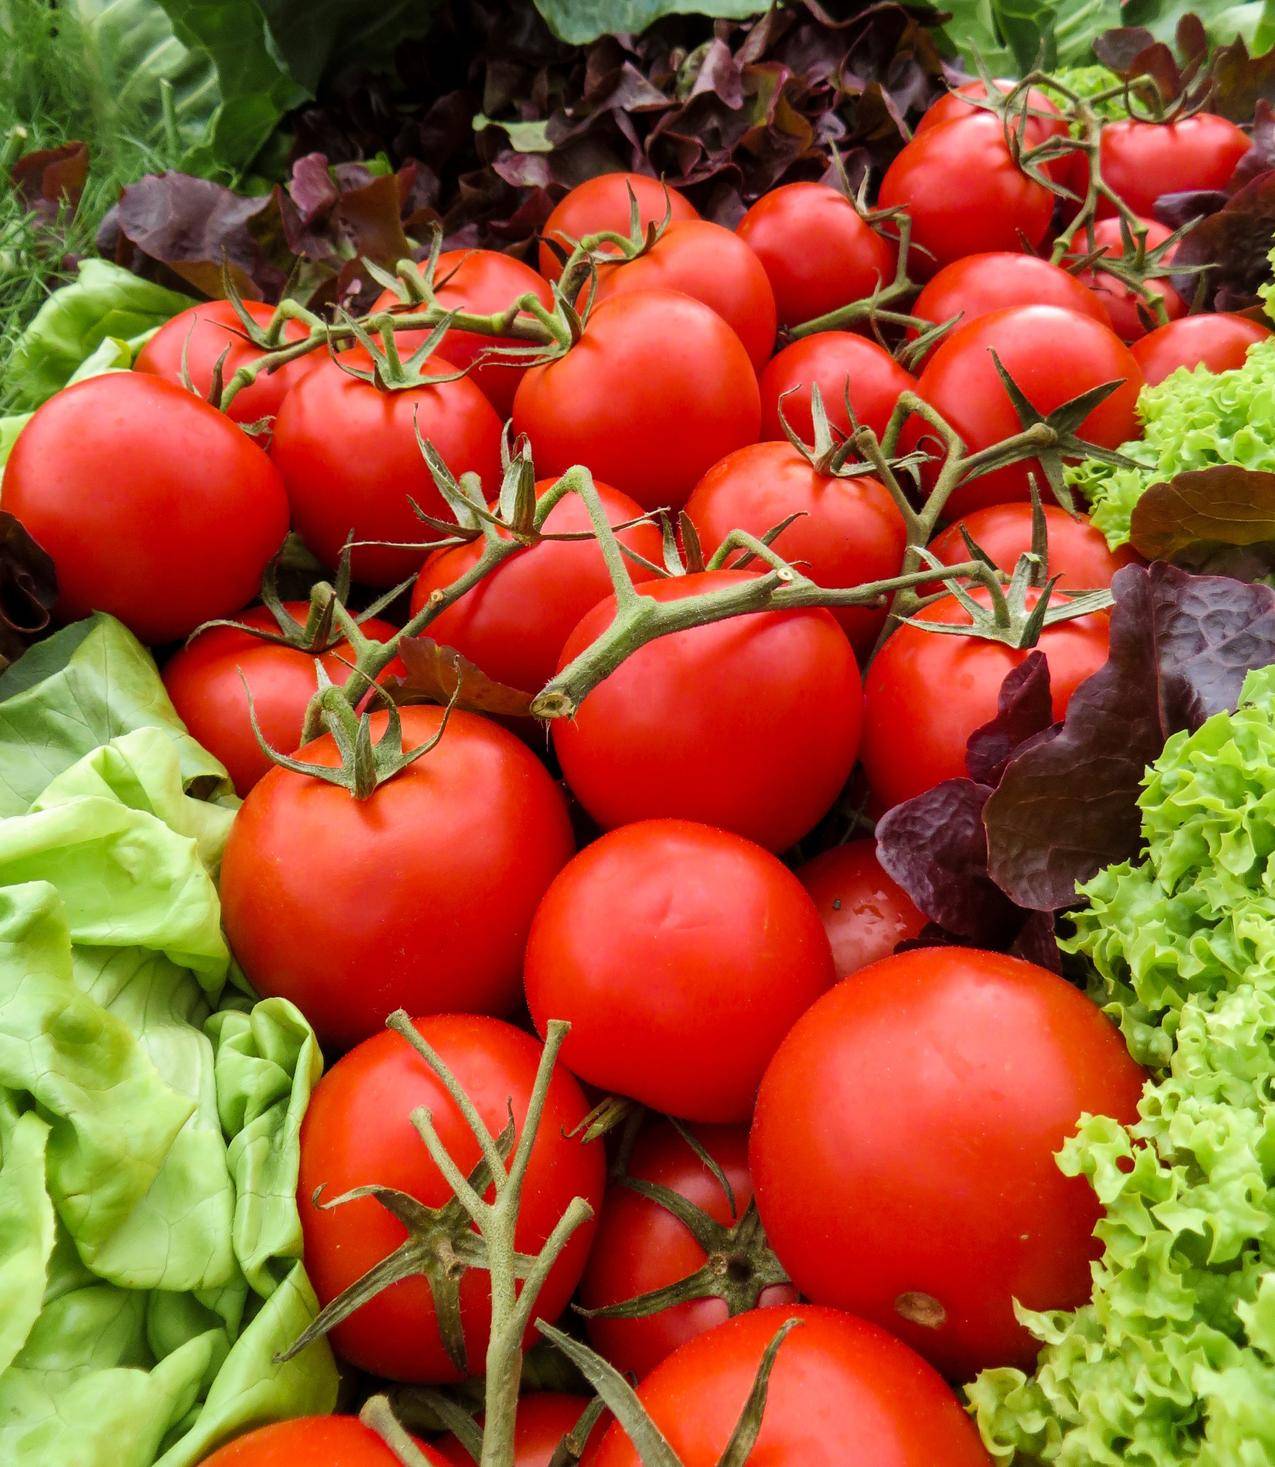 cc0可商用高清食品,蔬菜,西红柿,水果图片